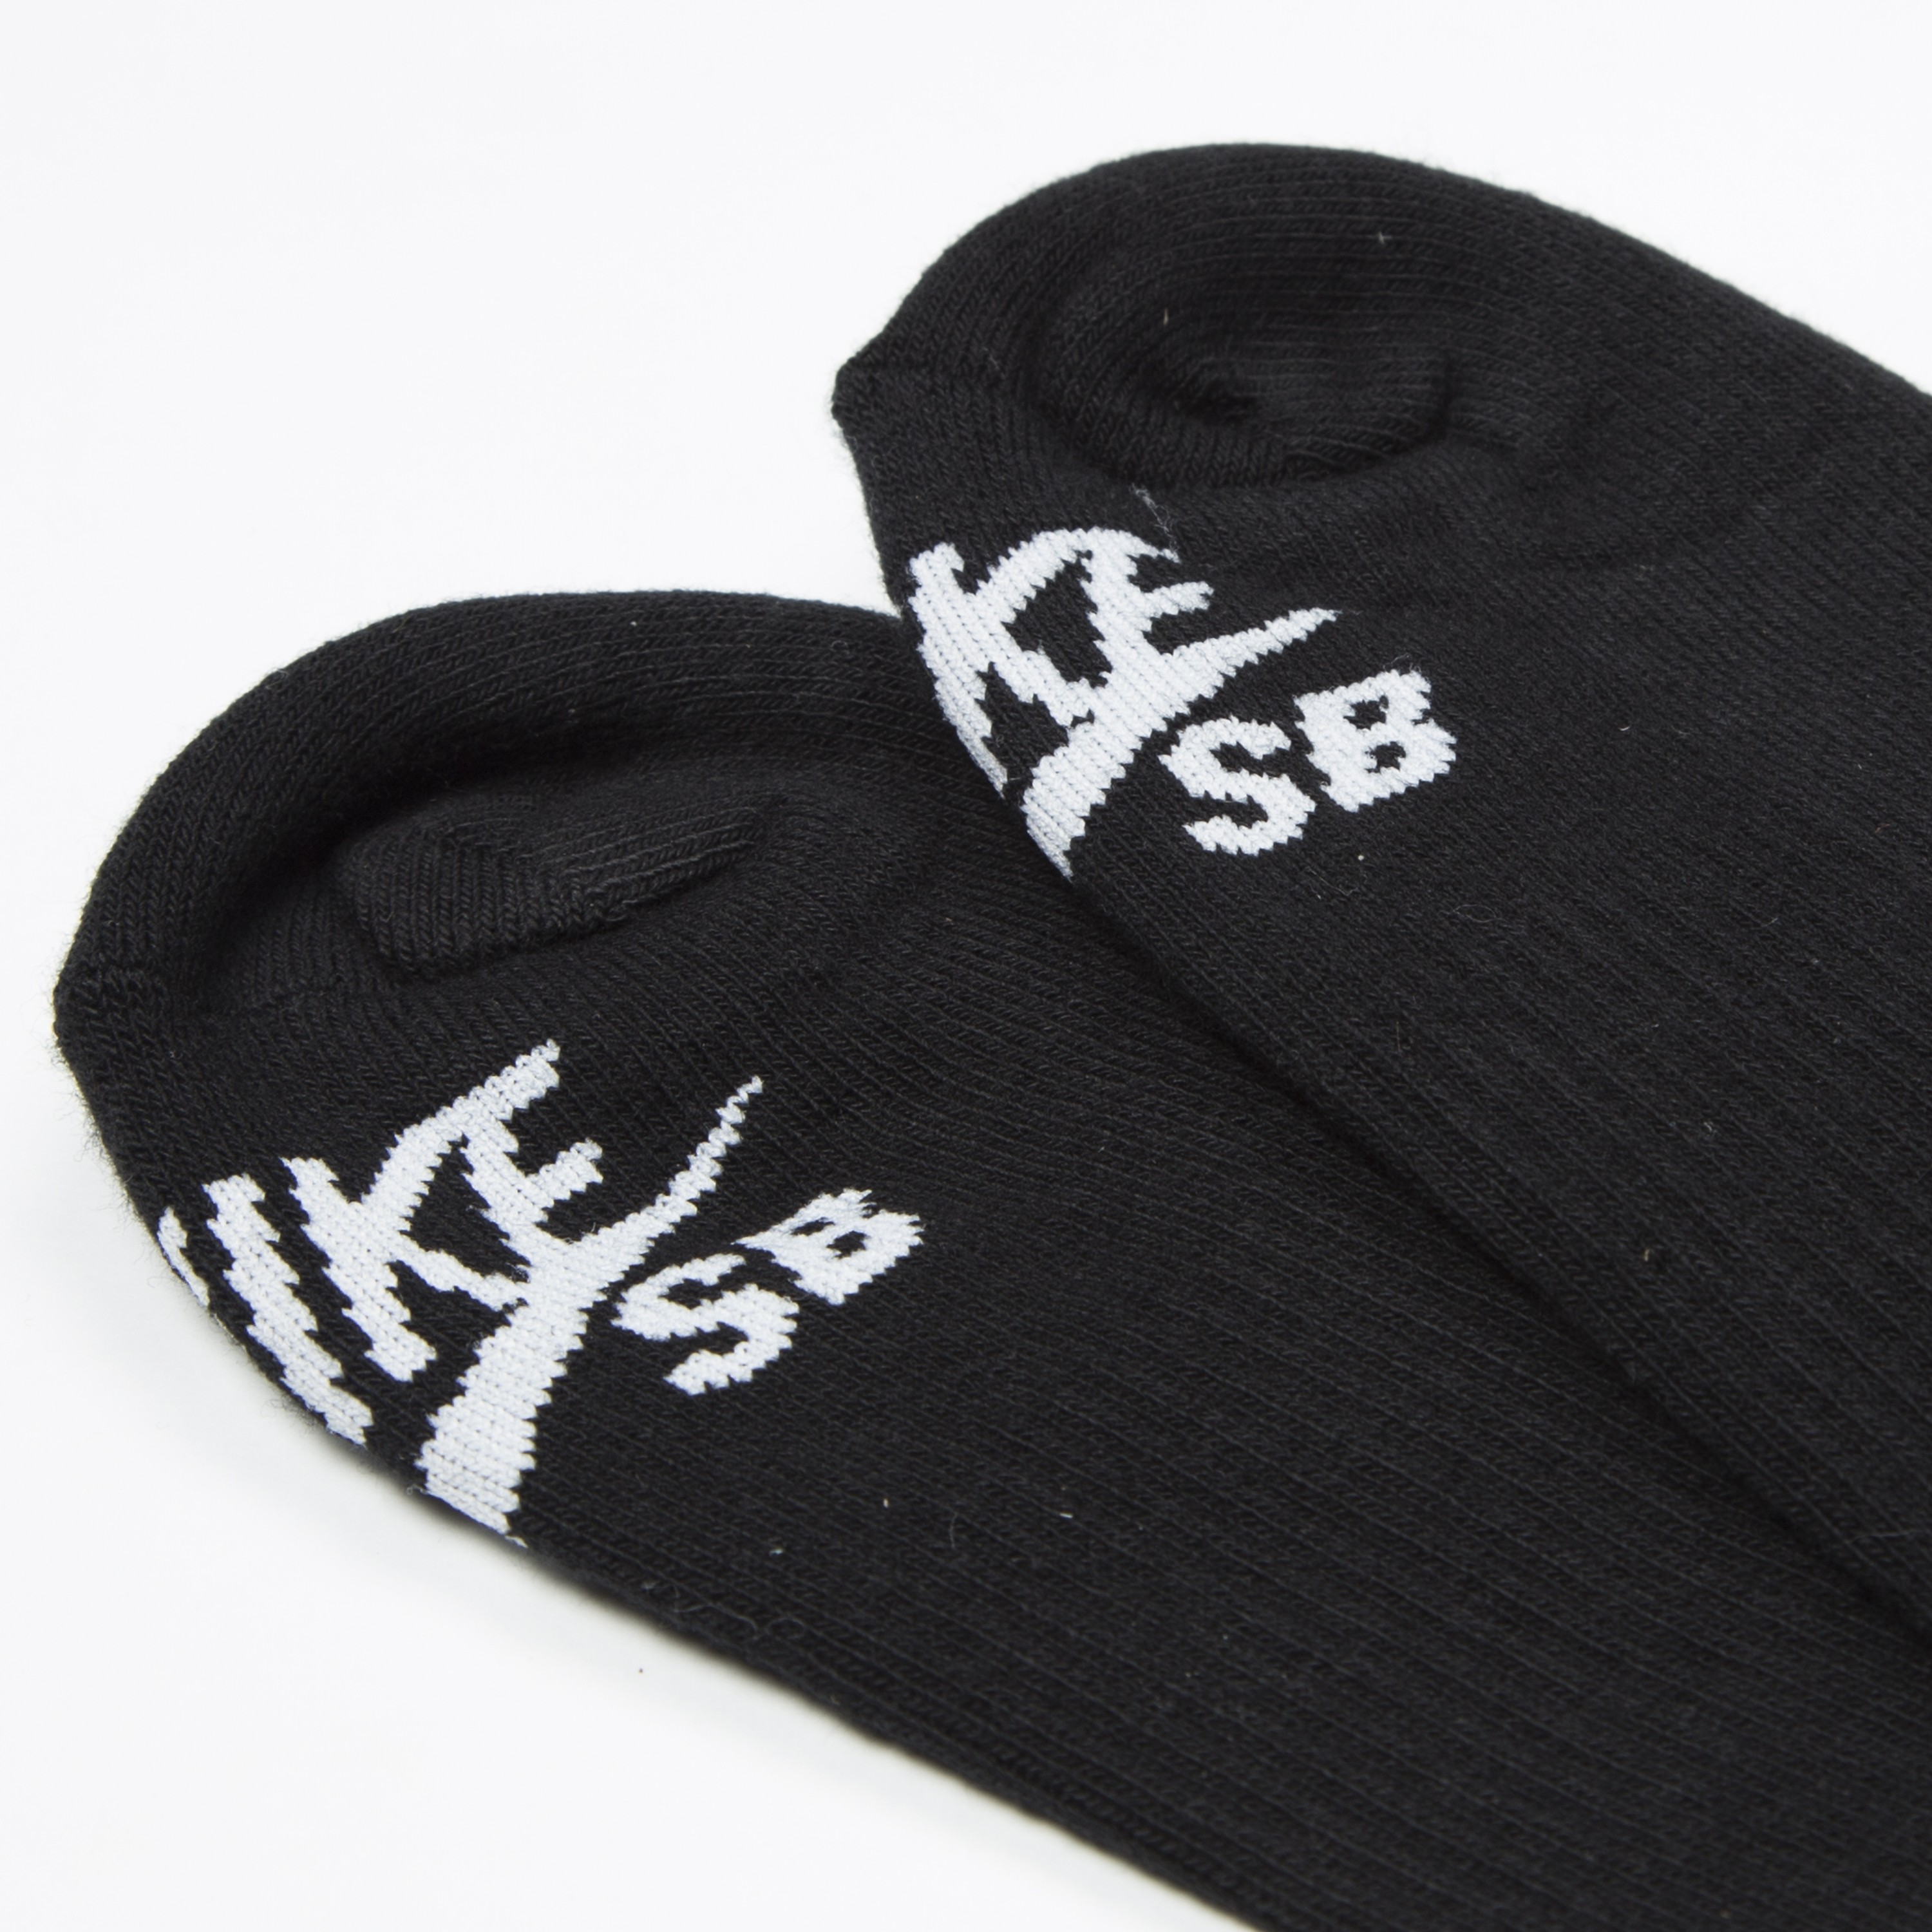 Nike SB Crew Socks Triple Pack (Black/White) - Consortium.